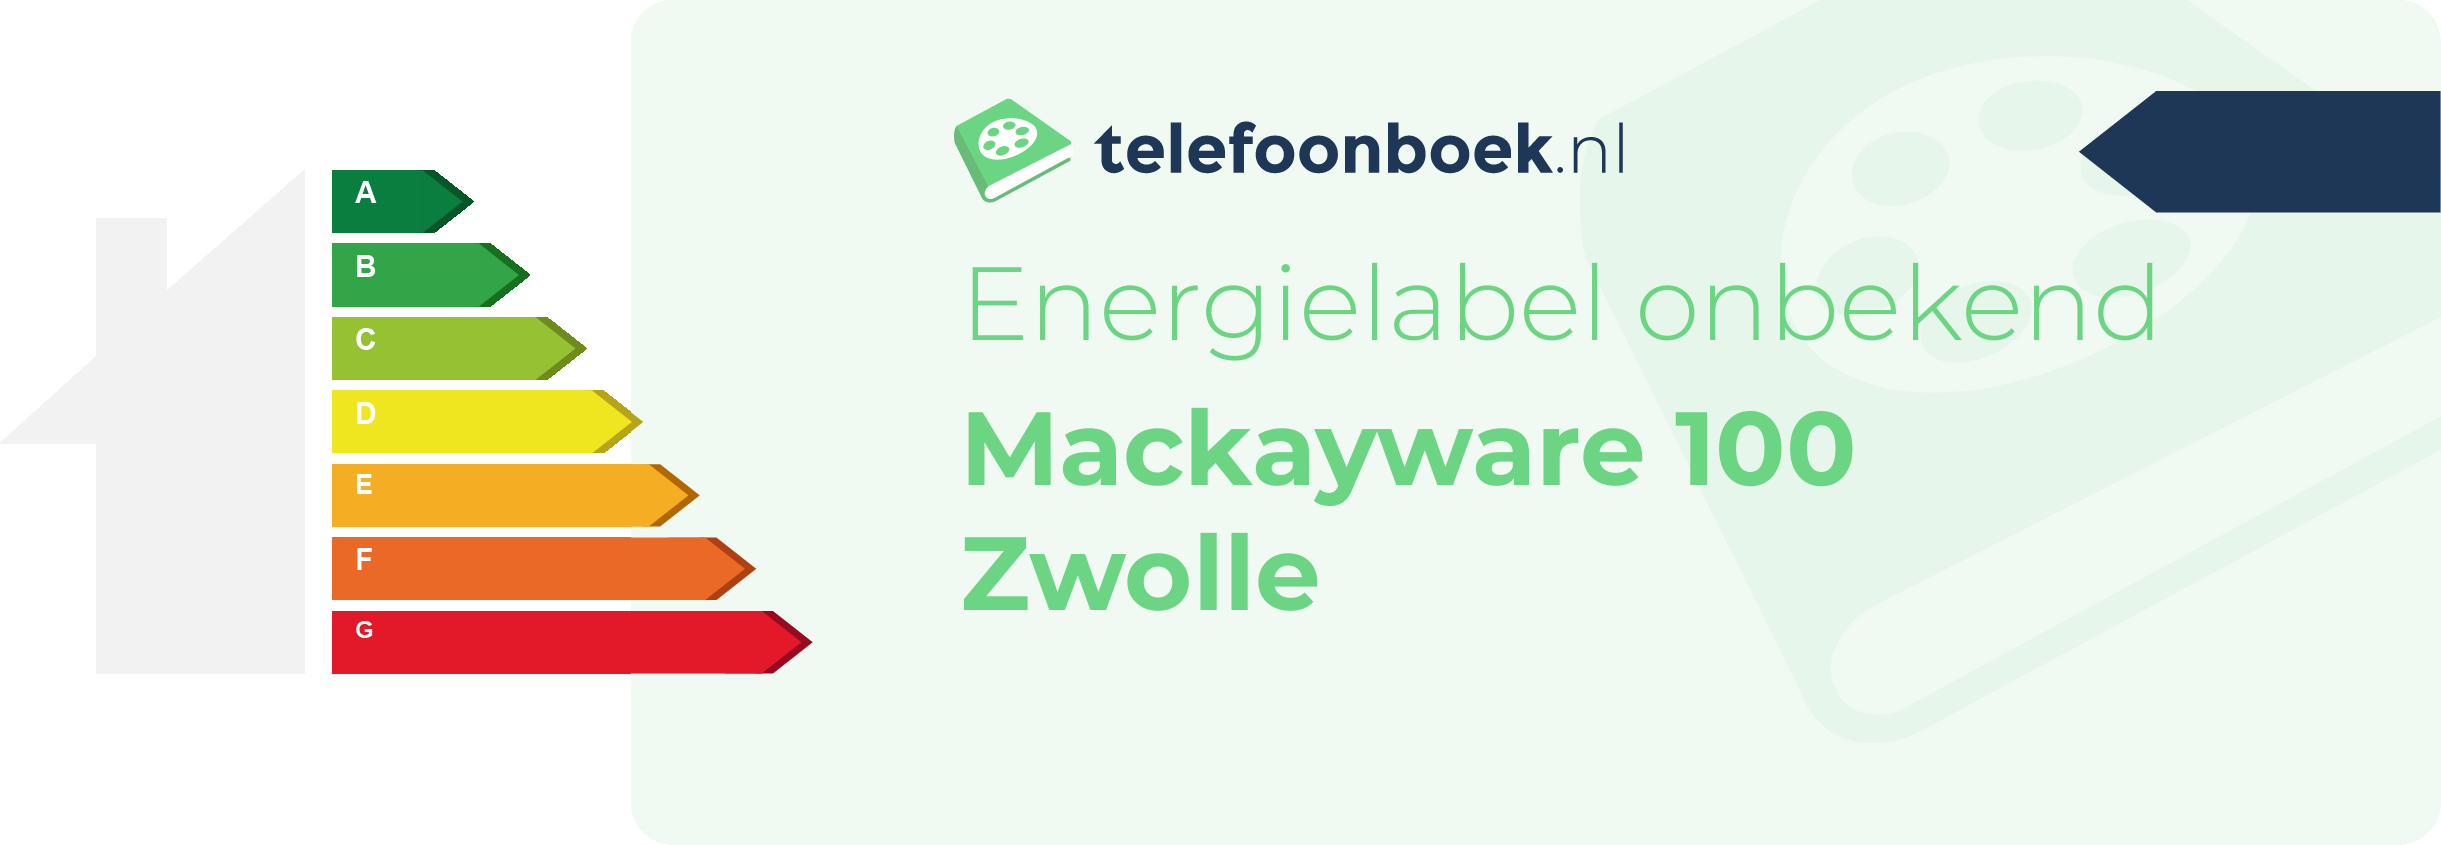 Energielabel Mackayware 100 Zwolle